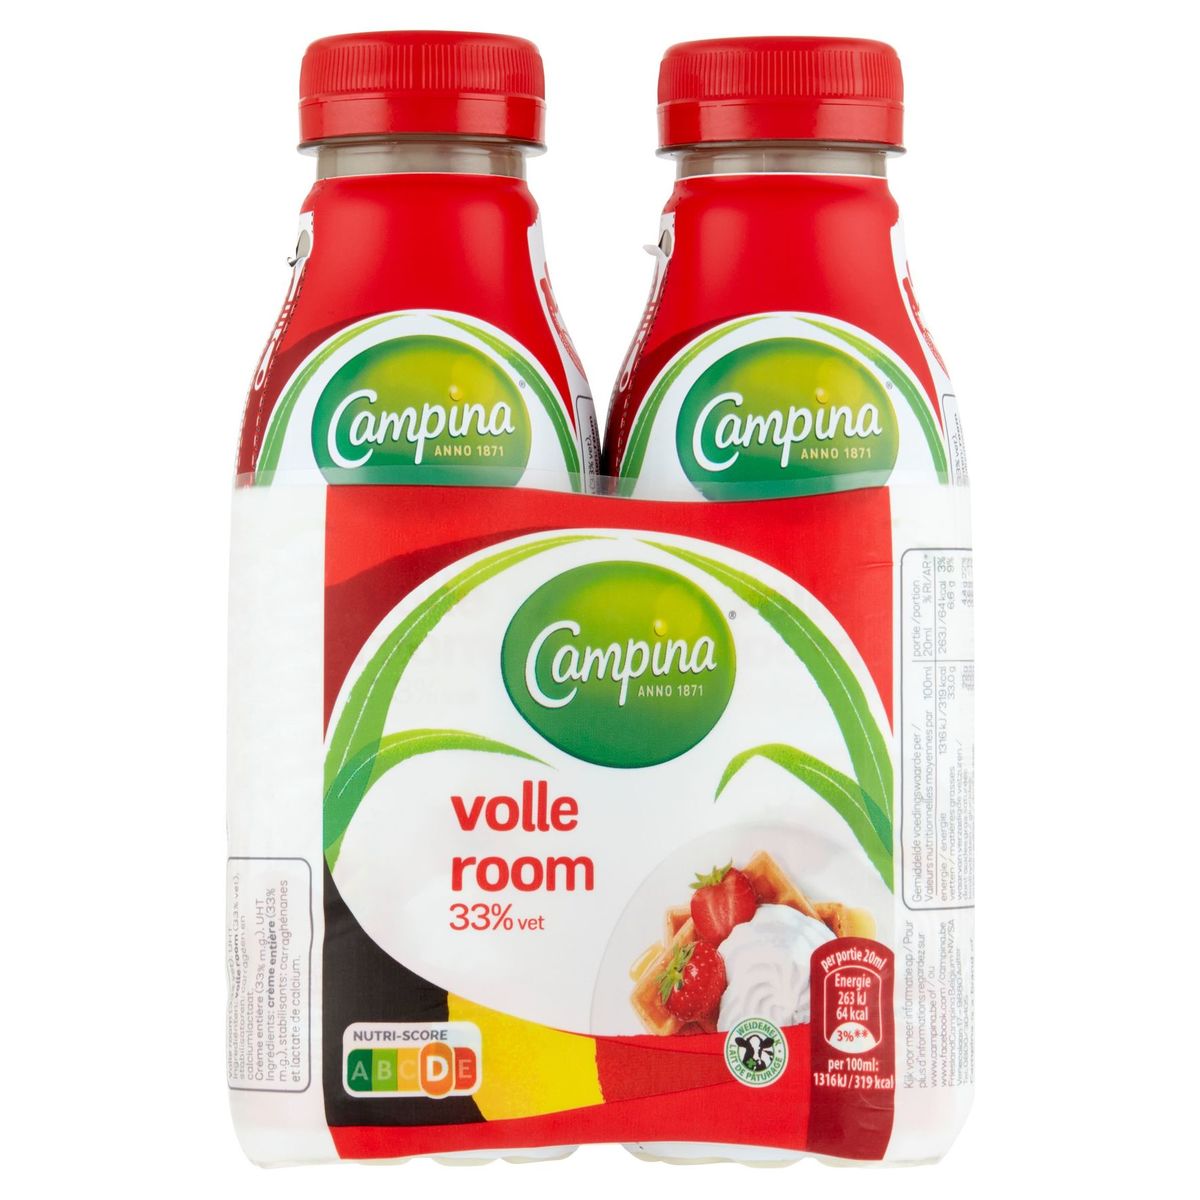 Campina Volle Room 33% Vet 250 ml